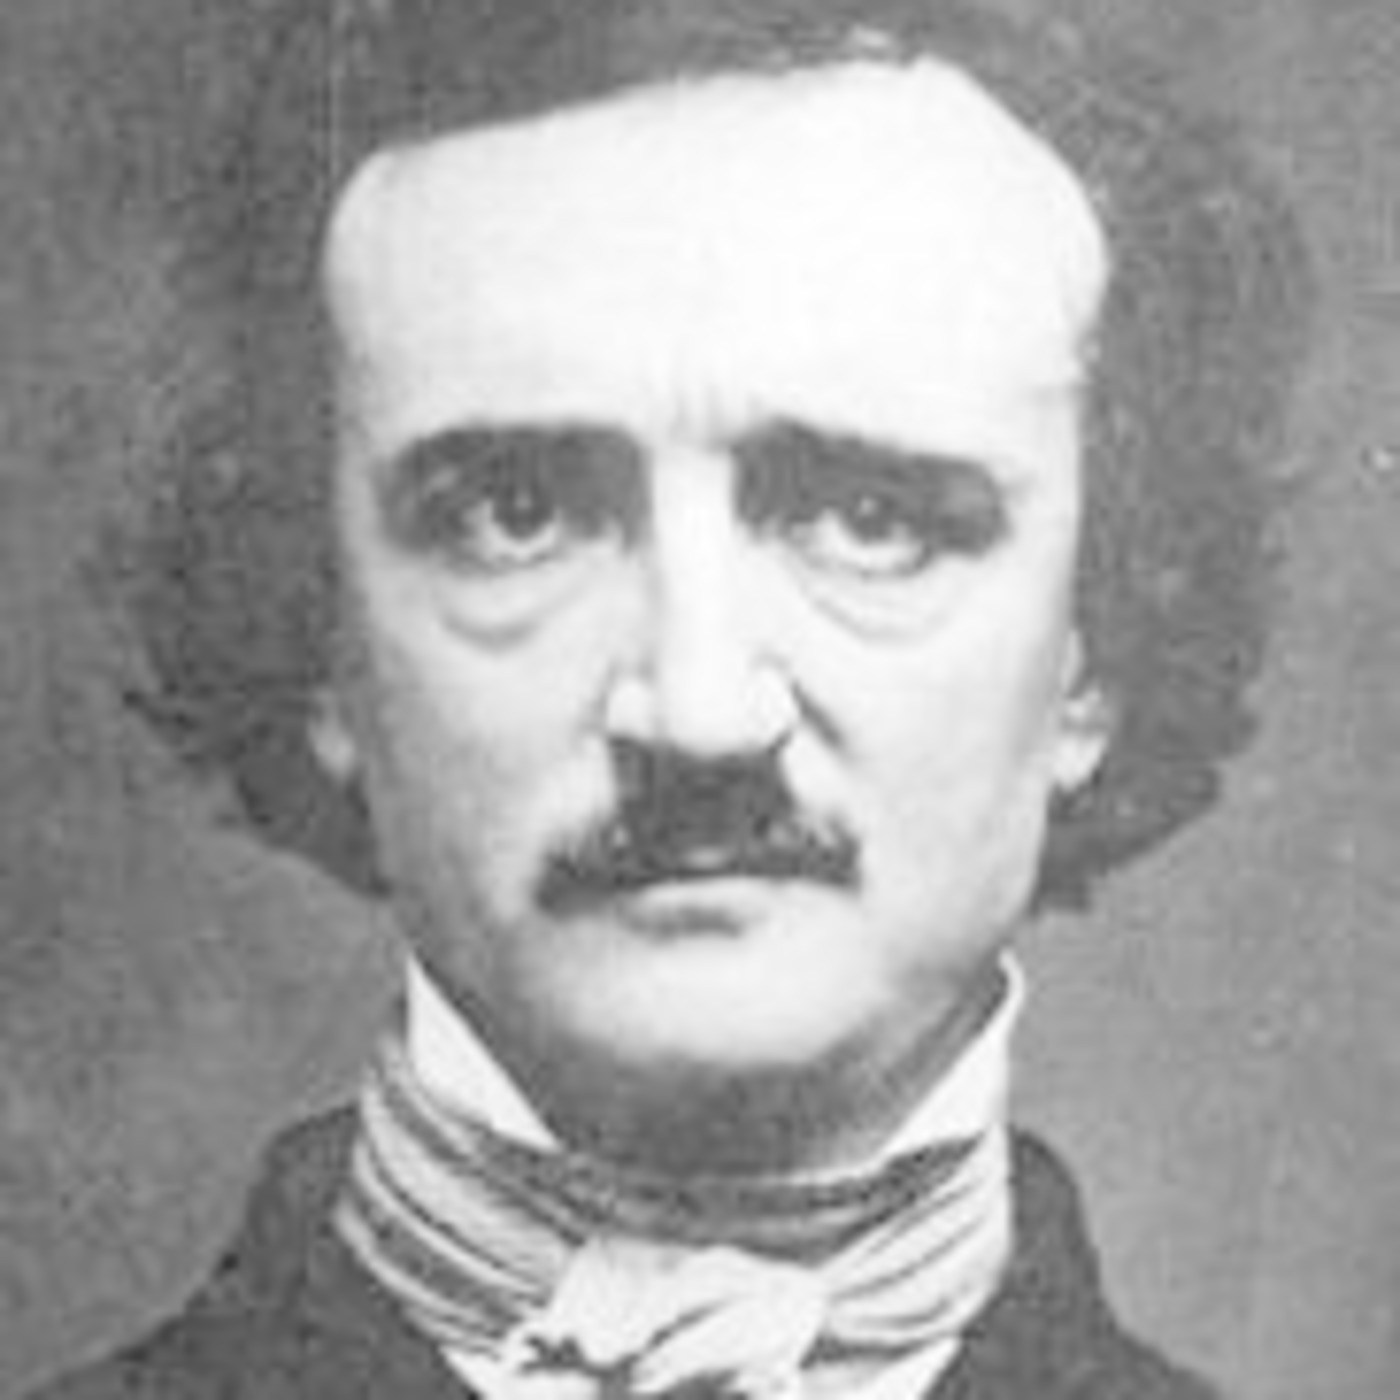 621: Annabel Lee by Edgar Allan Poe